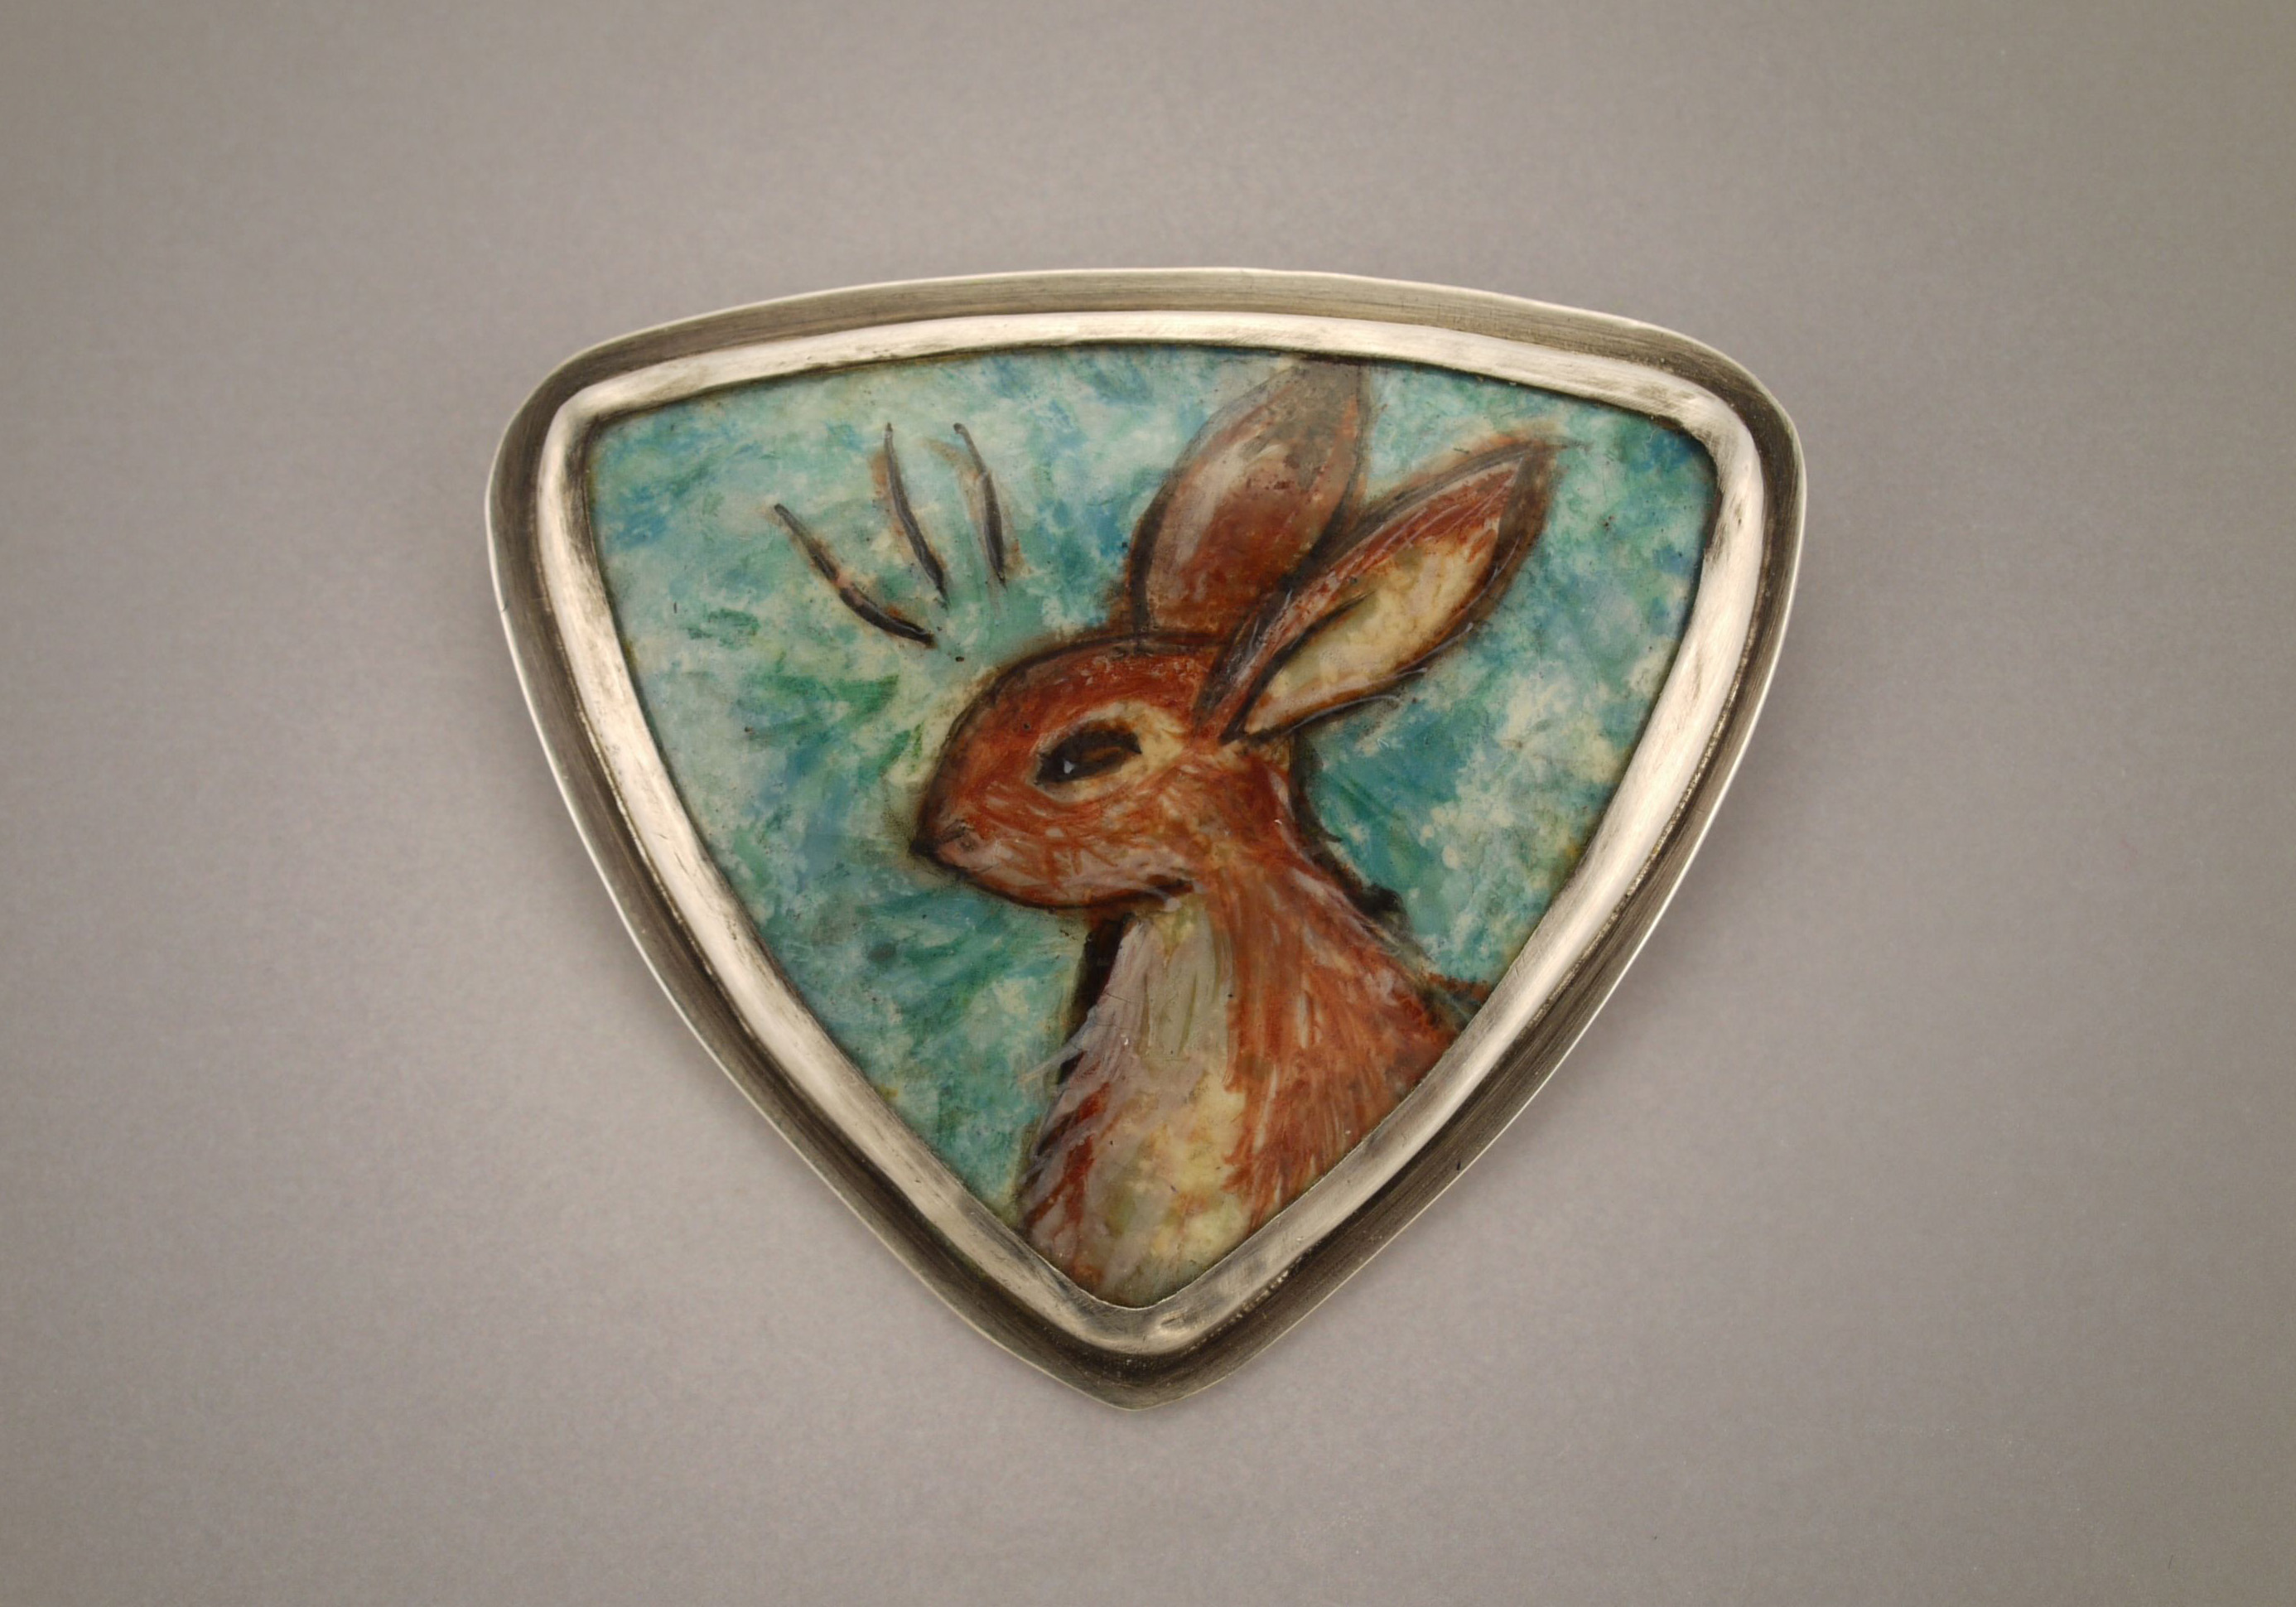 Painted Rabbit Pin